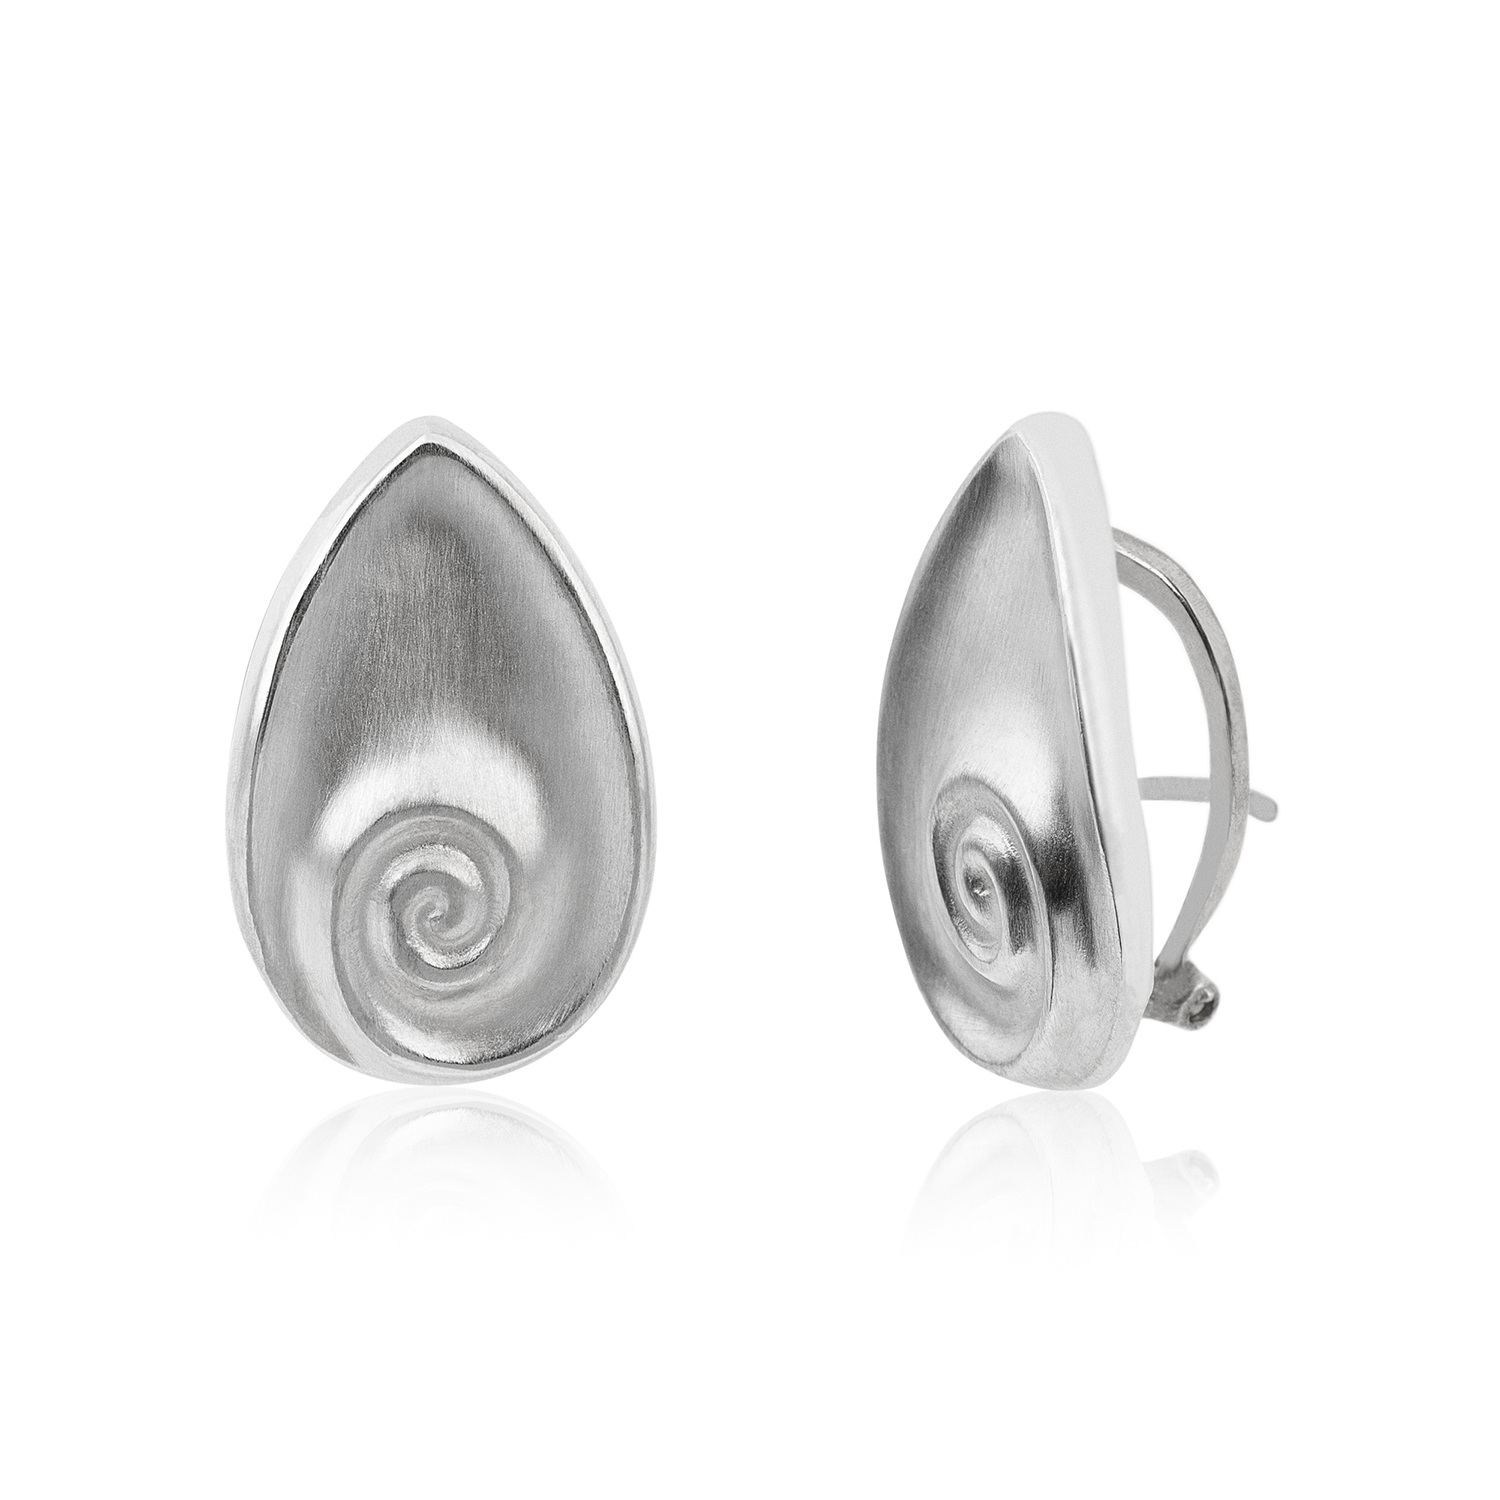 Spiral earrings